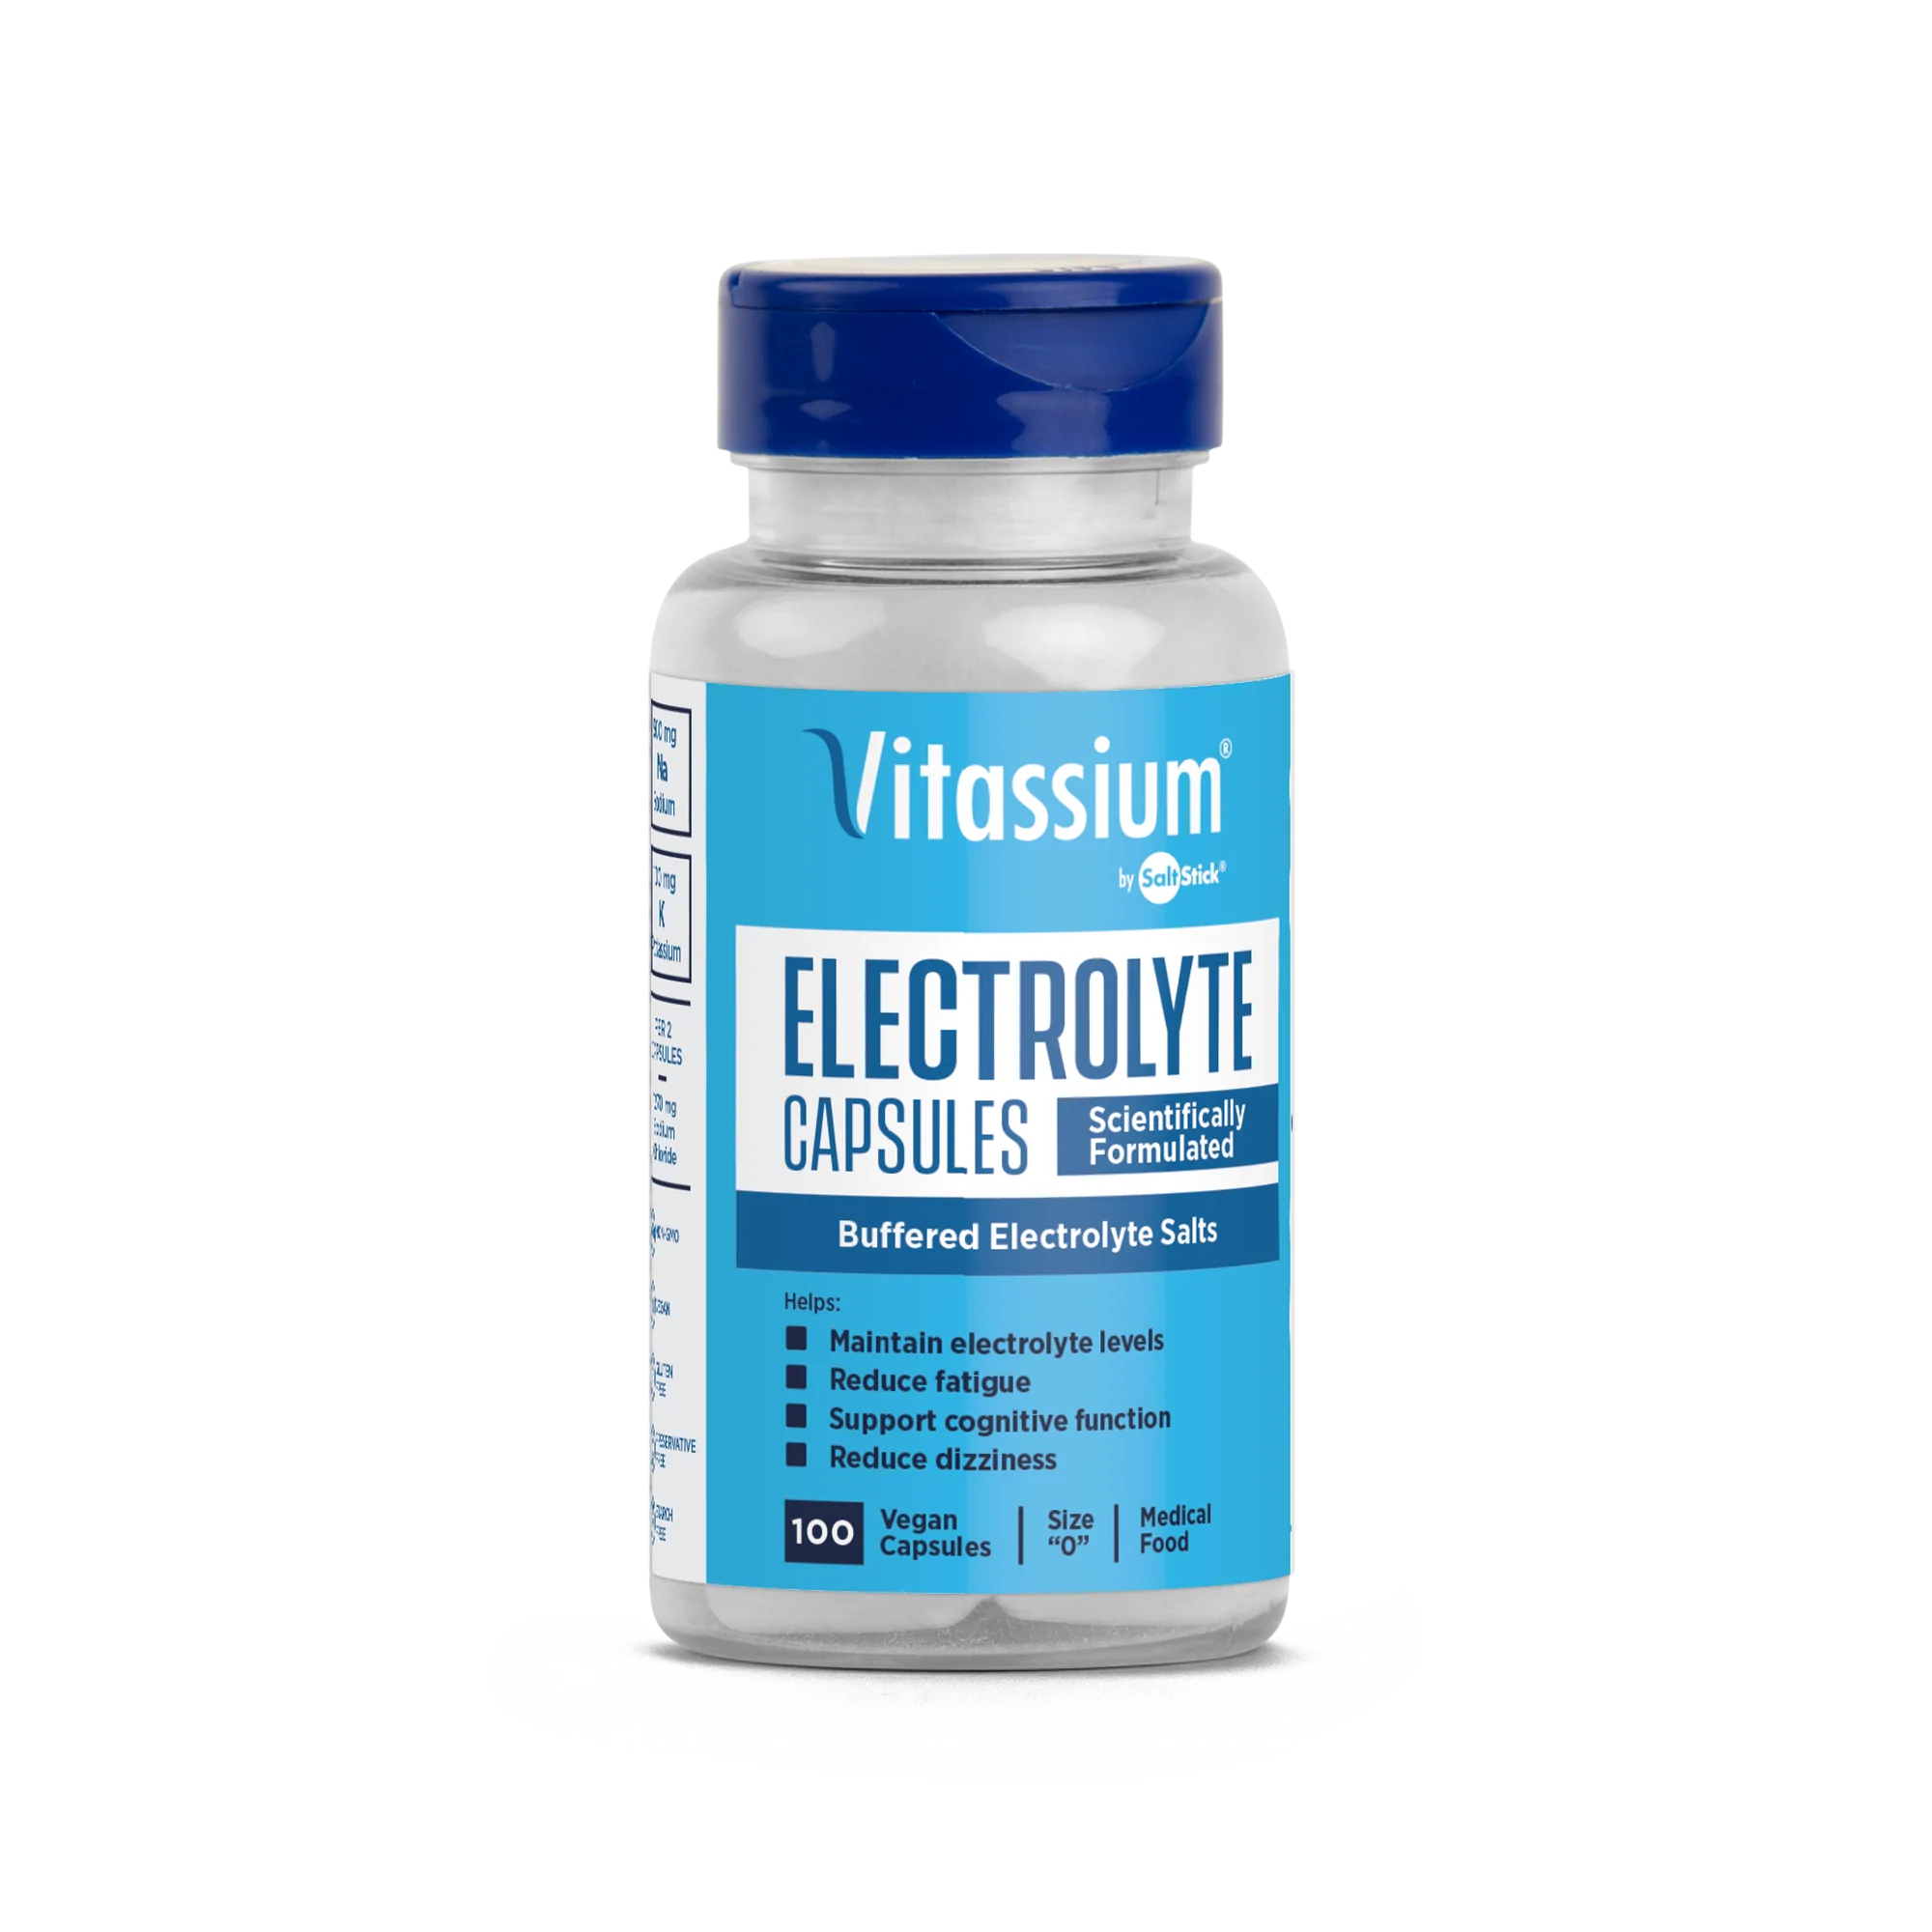 Vitassium Electrolyte Capsules Bottle of 100